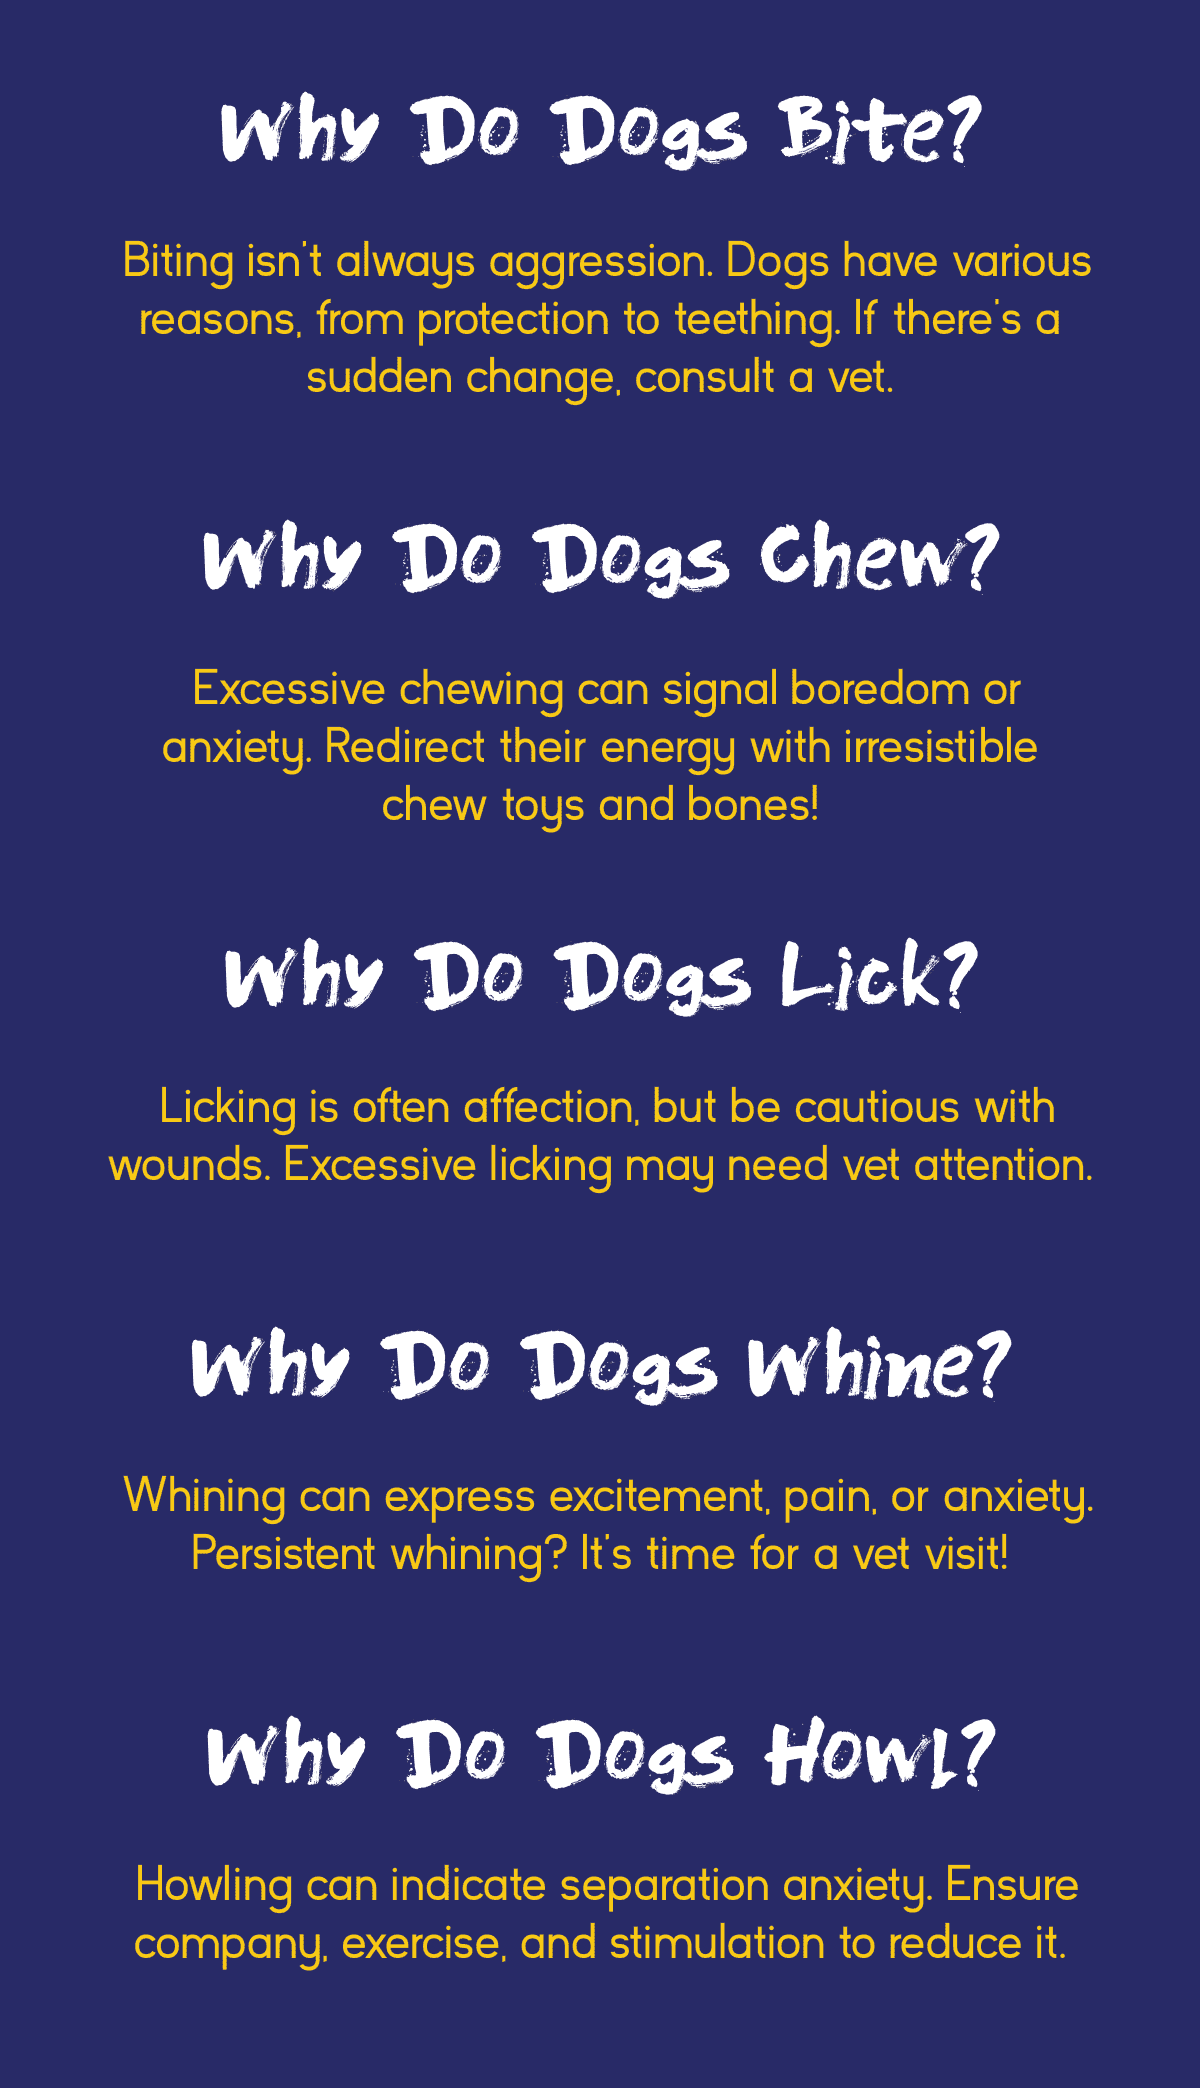 Common dog behaviors explained